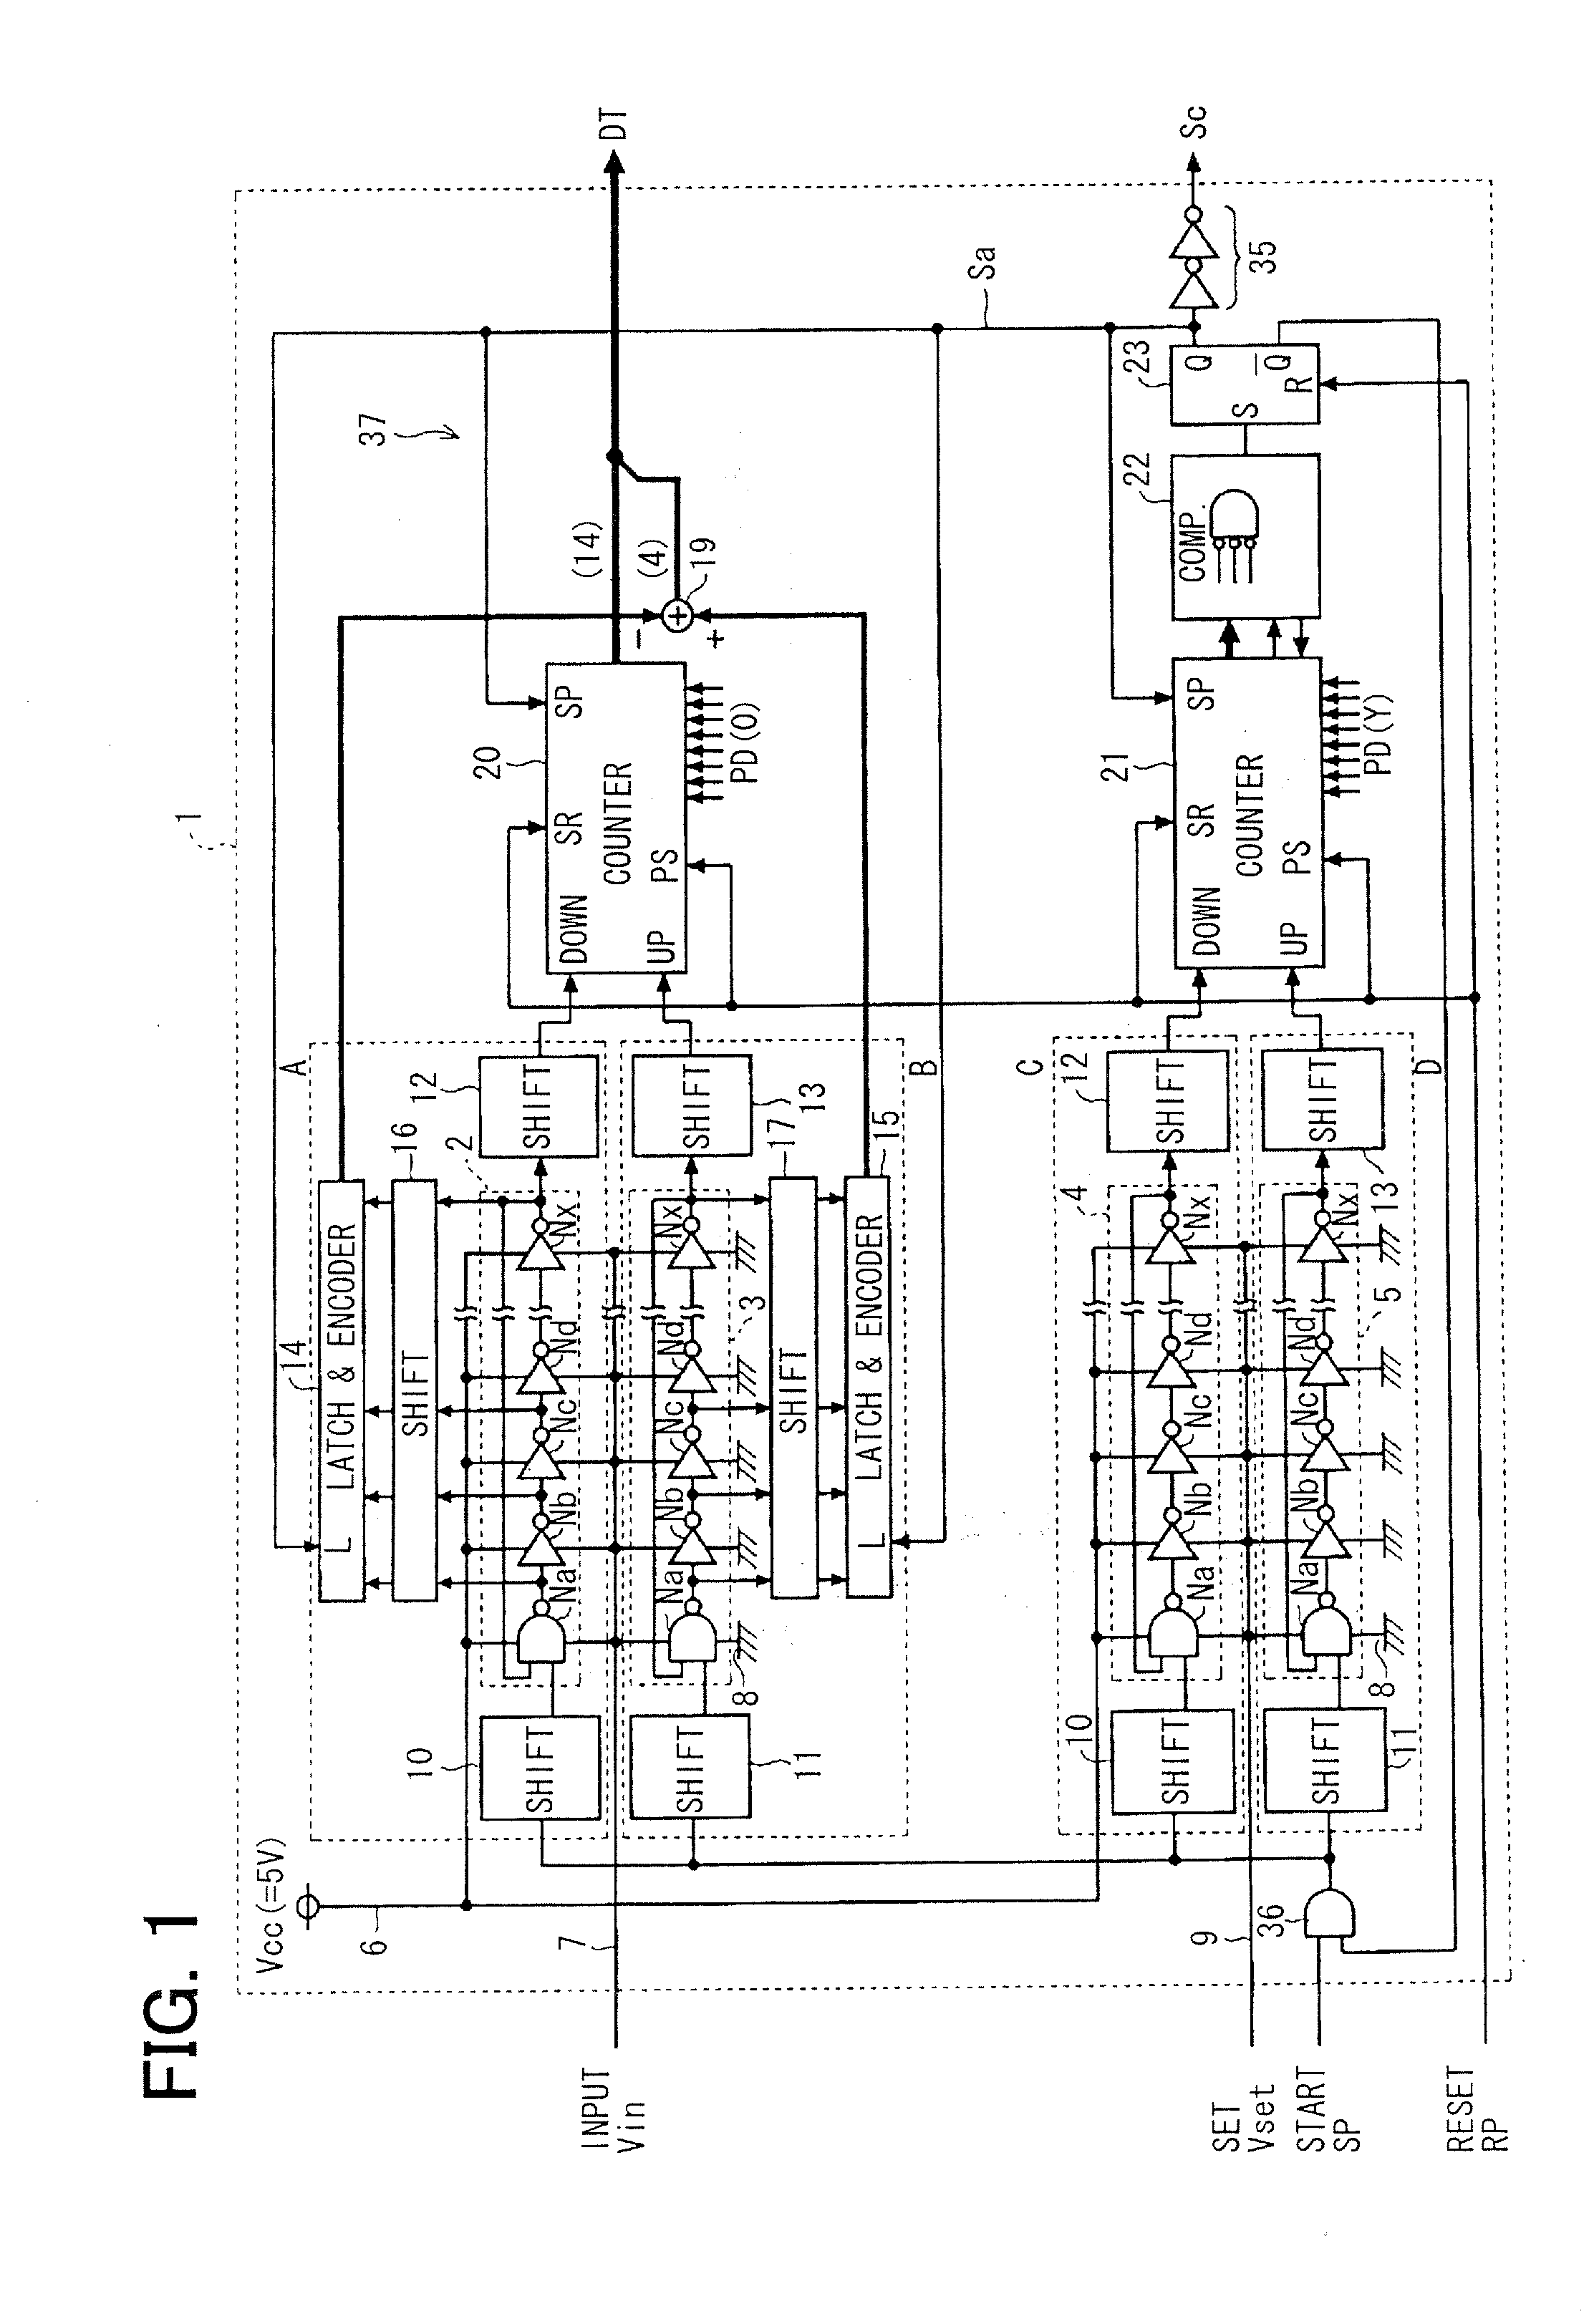 A/d converter circuit